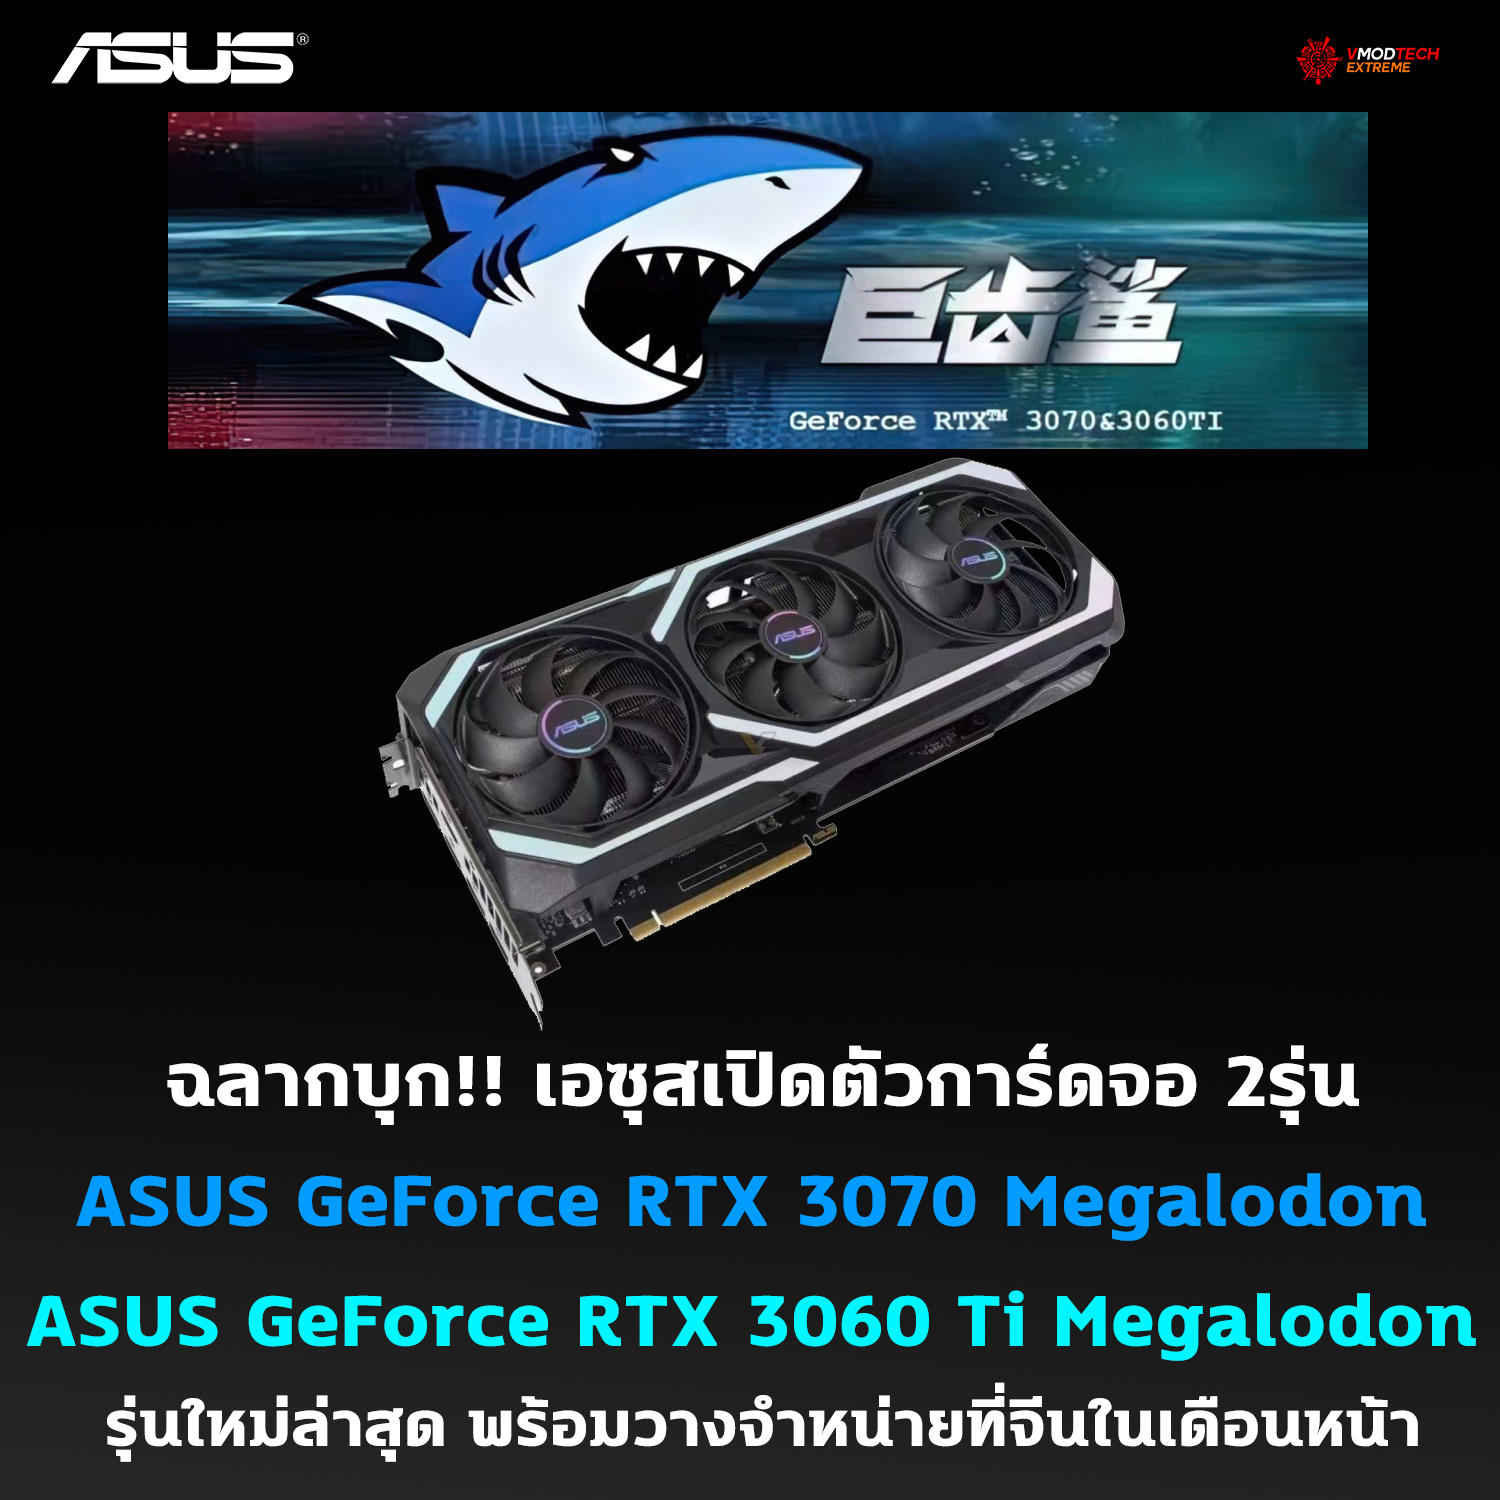 asus geforce rtx 3070 geforce rtx 3060 ti megalodon ฉลากบุก!! เอซุสเปิดตัวการ์ดจอ ASUS GeForce RTX 3070 และ GeForce RTX 3060 Ti Megalodon รุ่นใหม่ล่าสุด